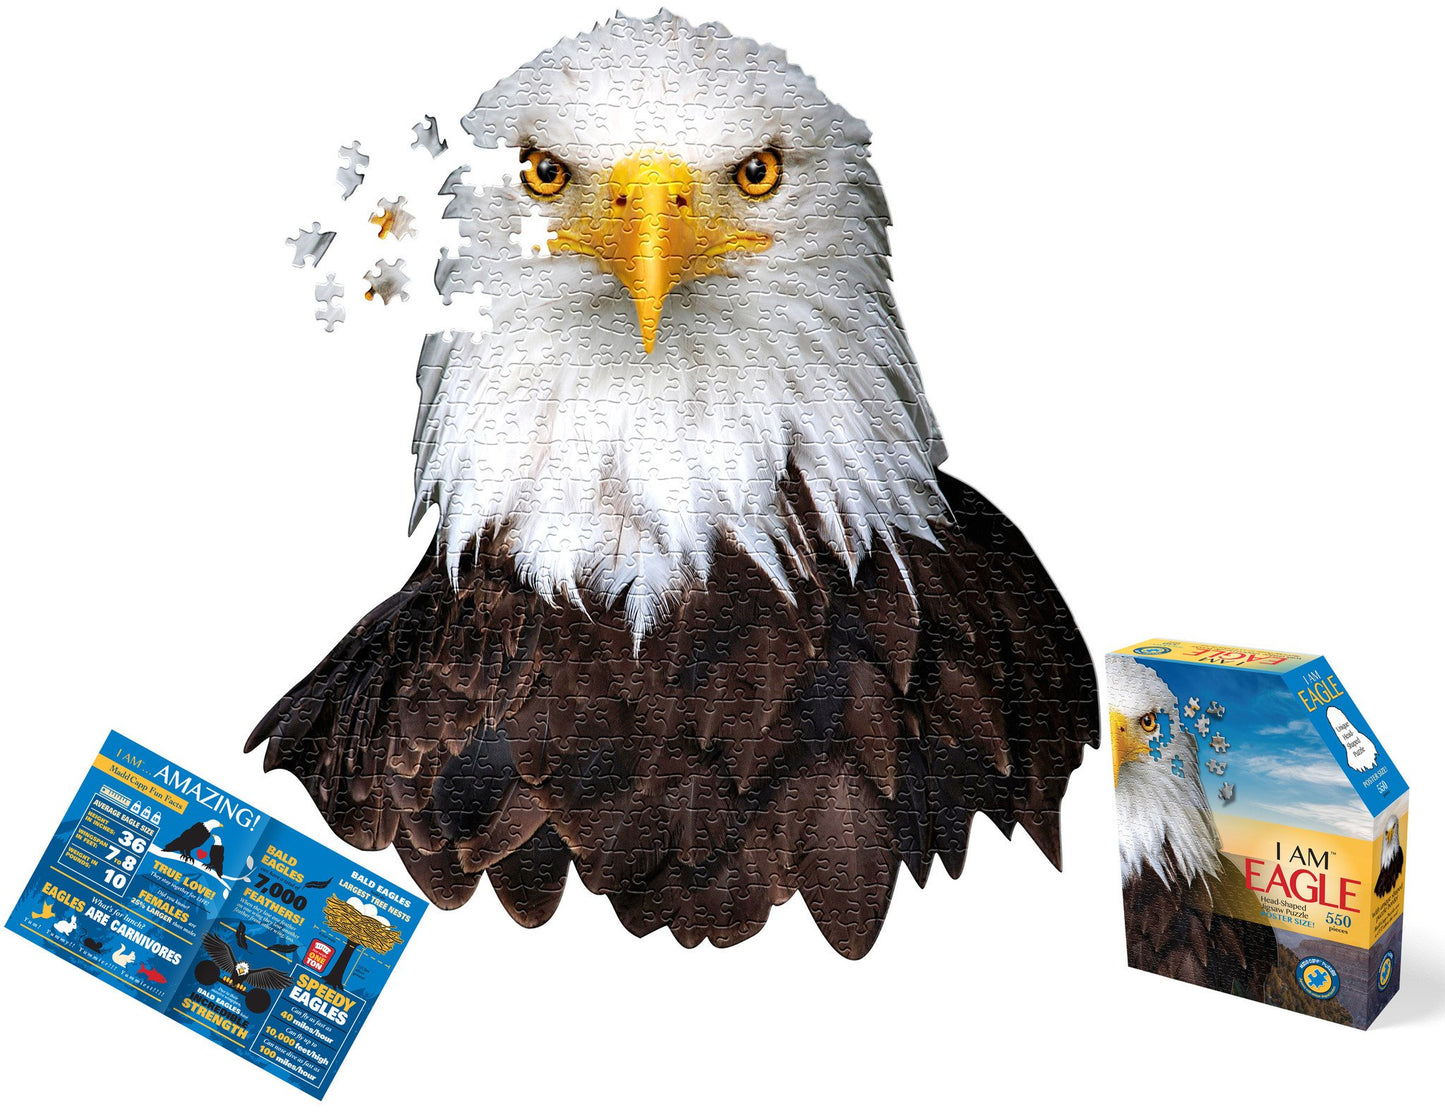 I am eagle jigsaw puzzle